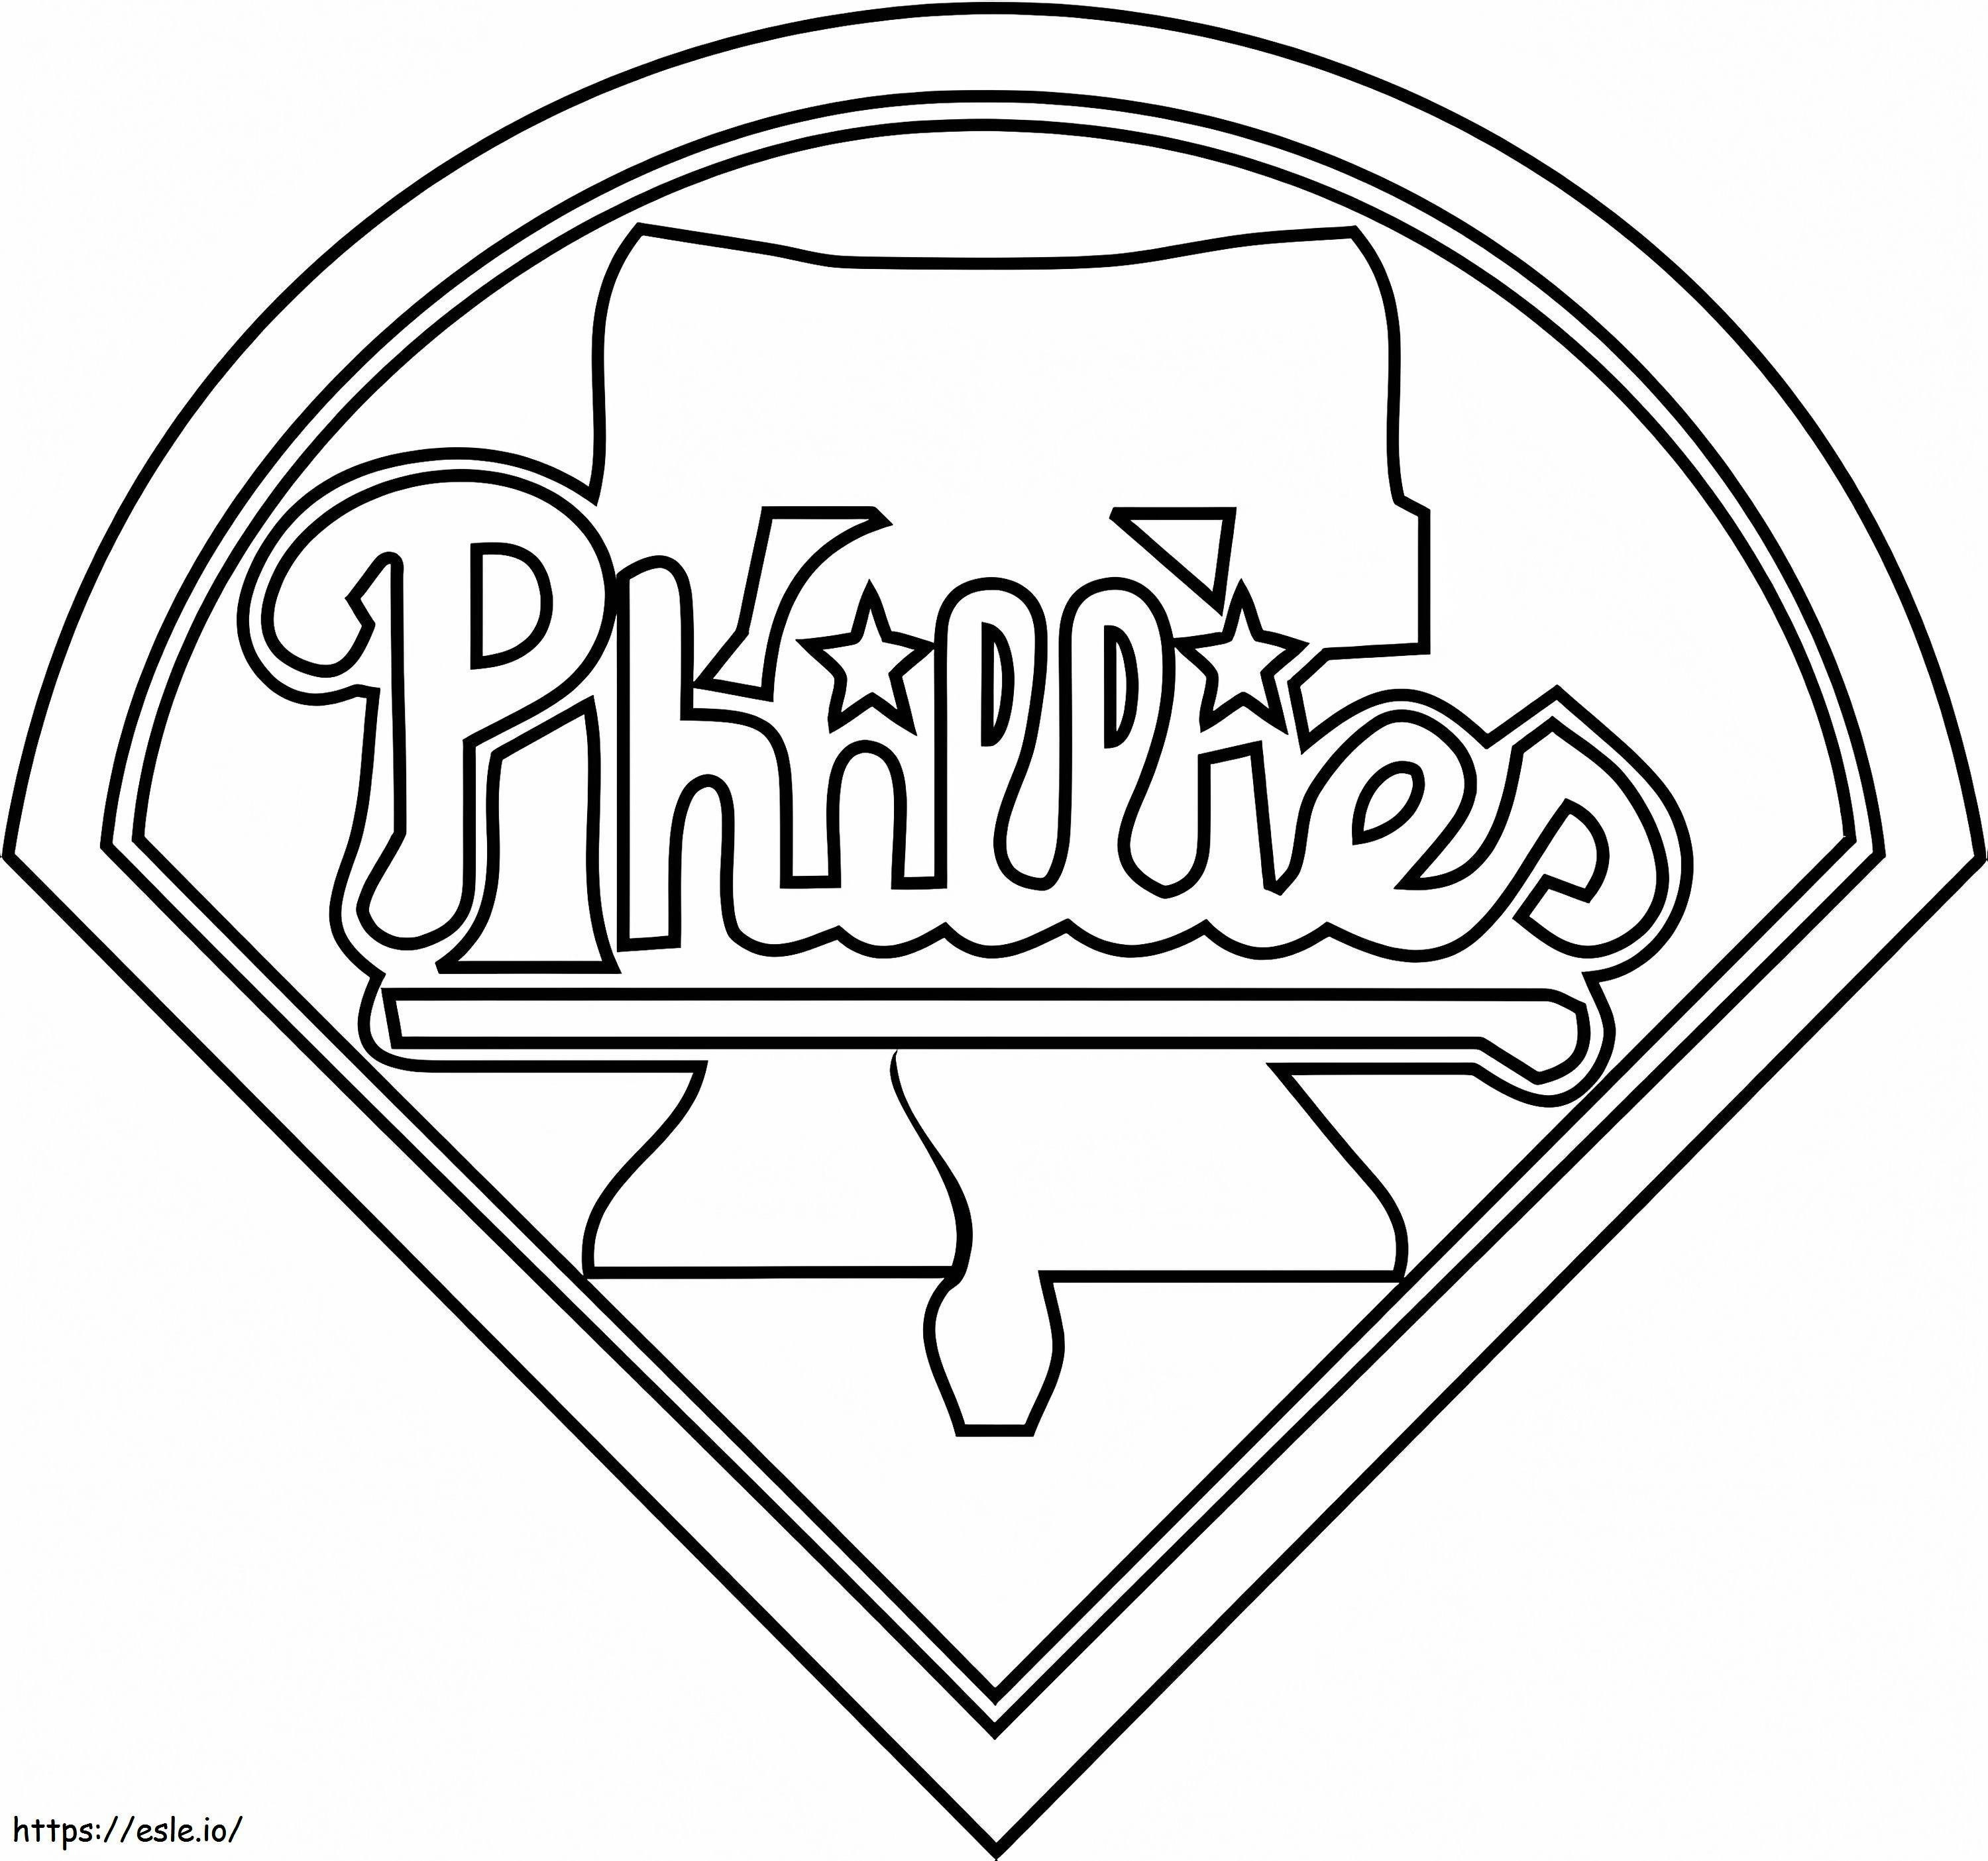 Philadelphia Phillies Logo coloring page